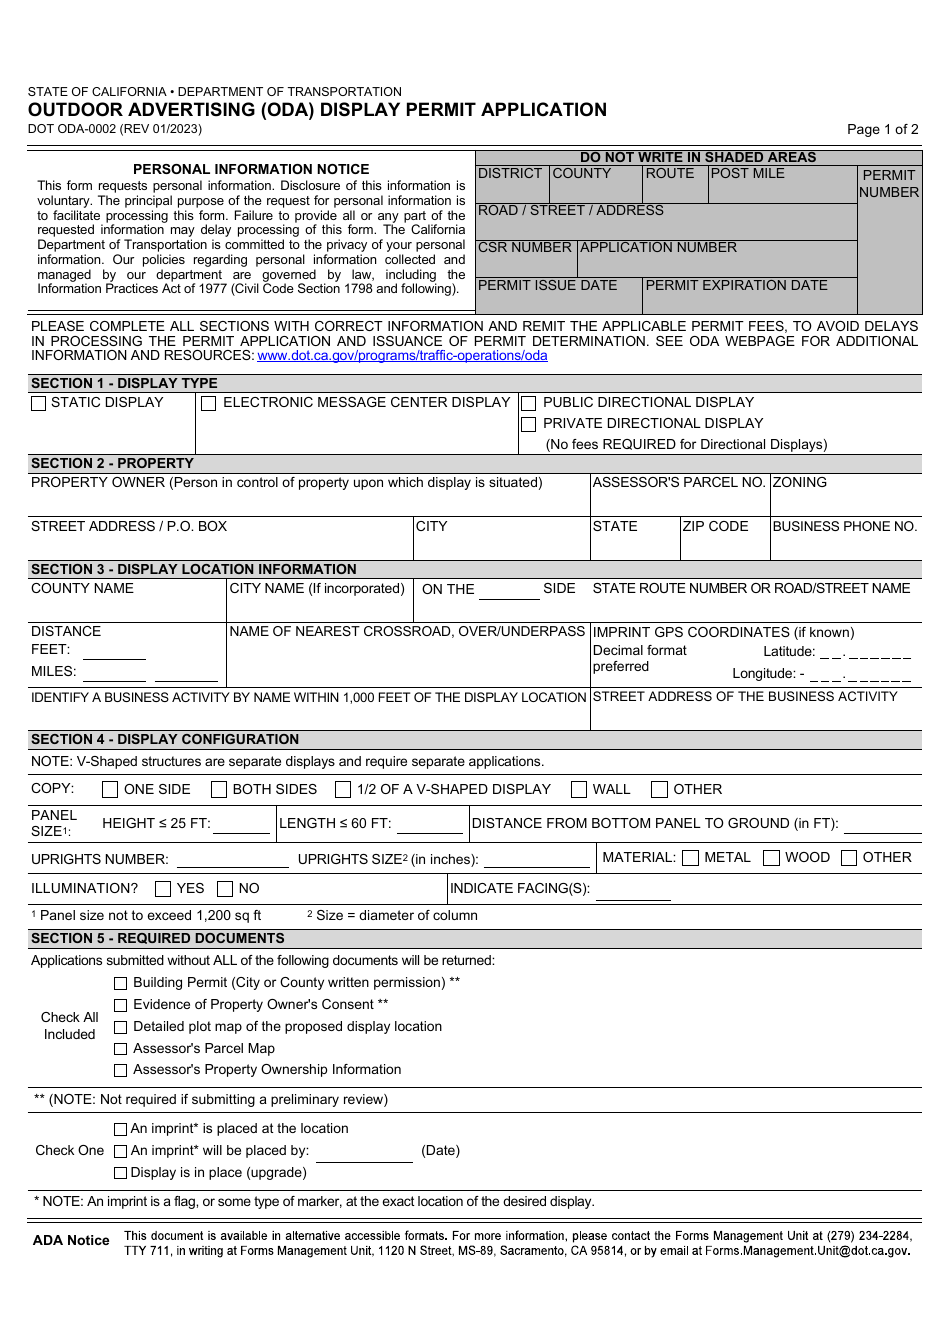 Form DOT ODA-0002 Outdoor Advertising (Oda) Display Permit Application - California, Page 1